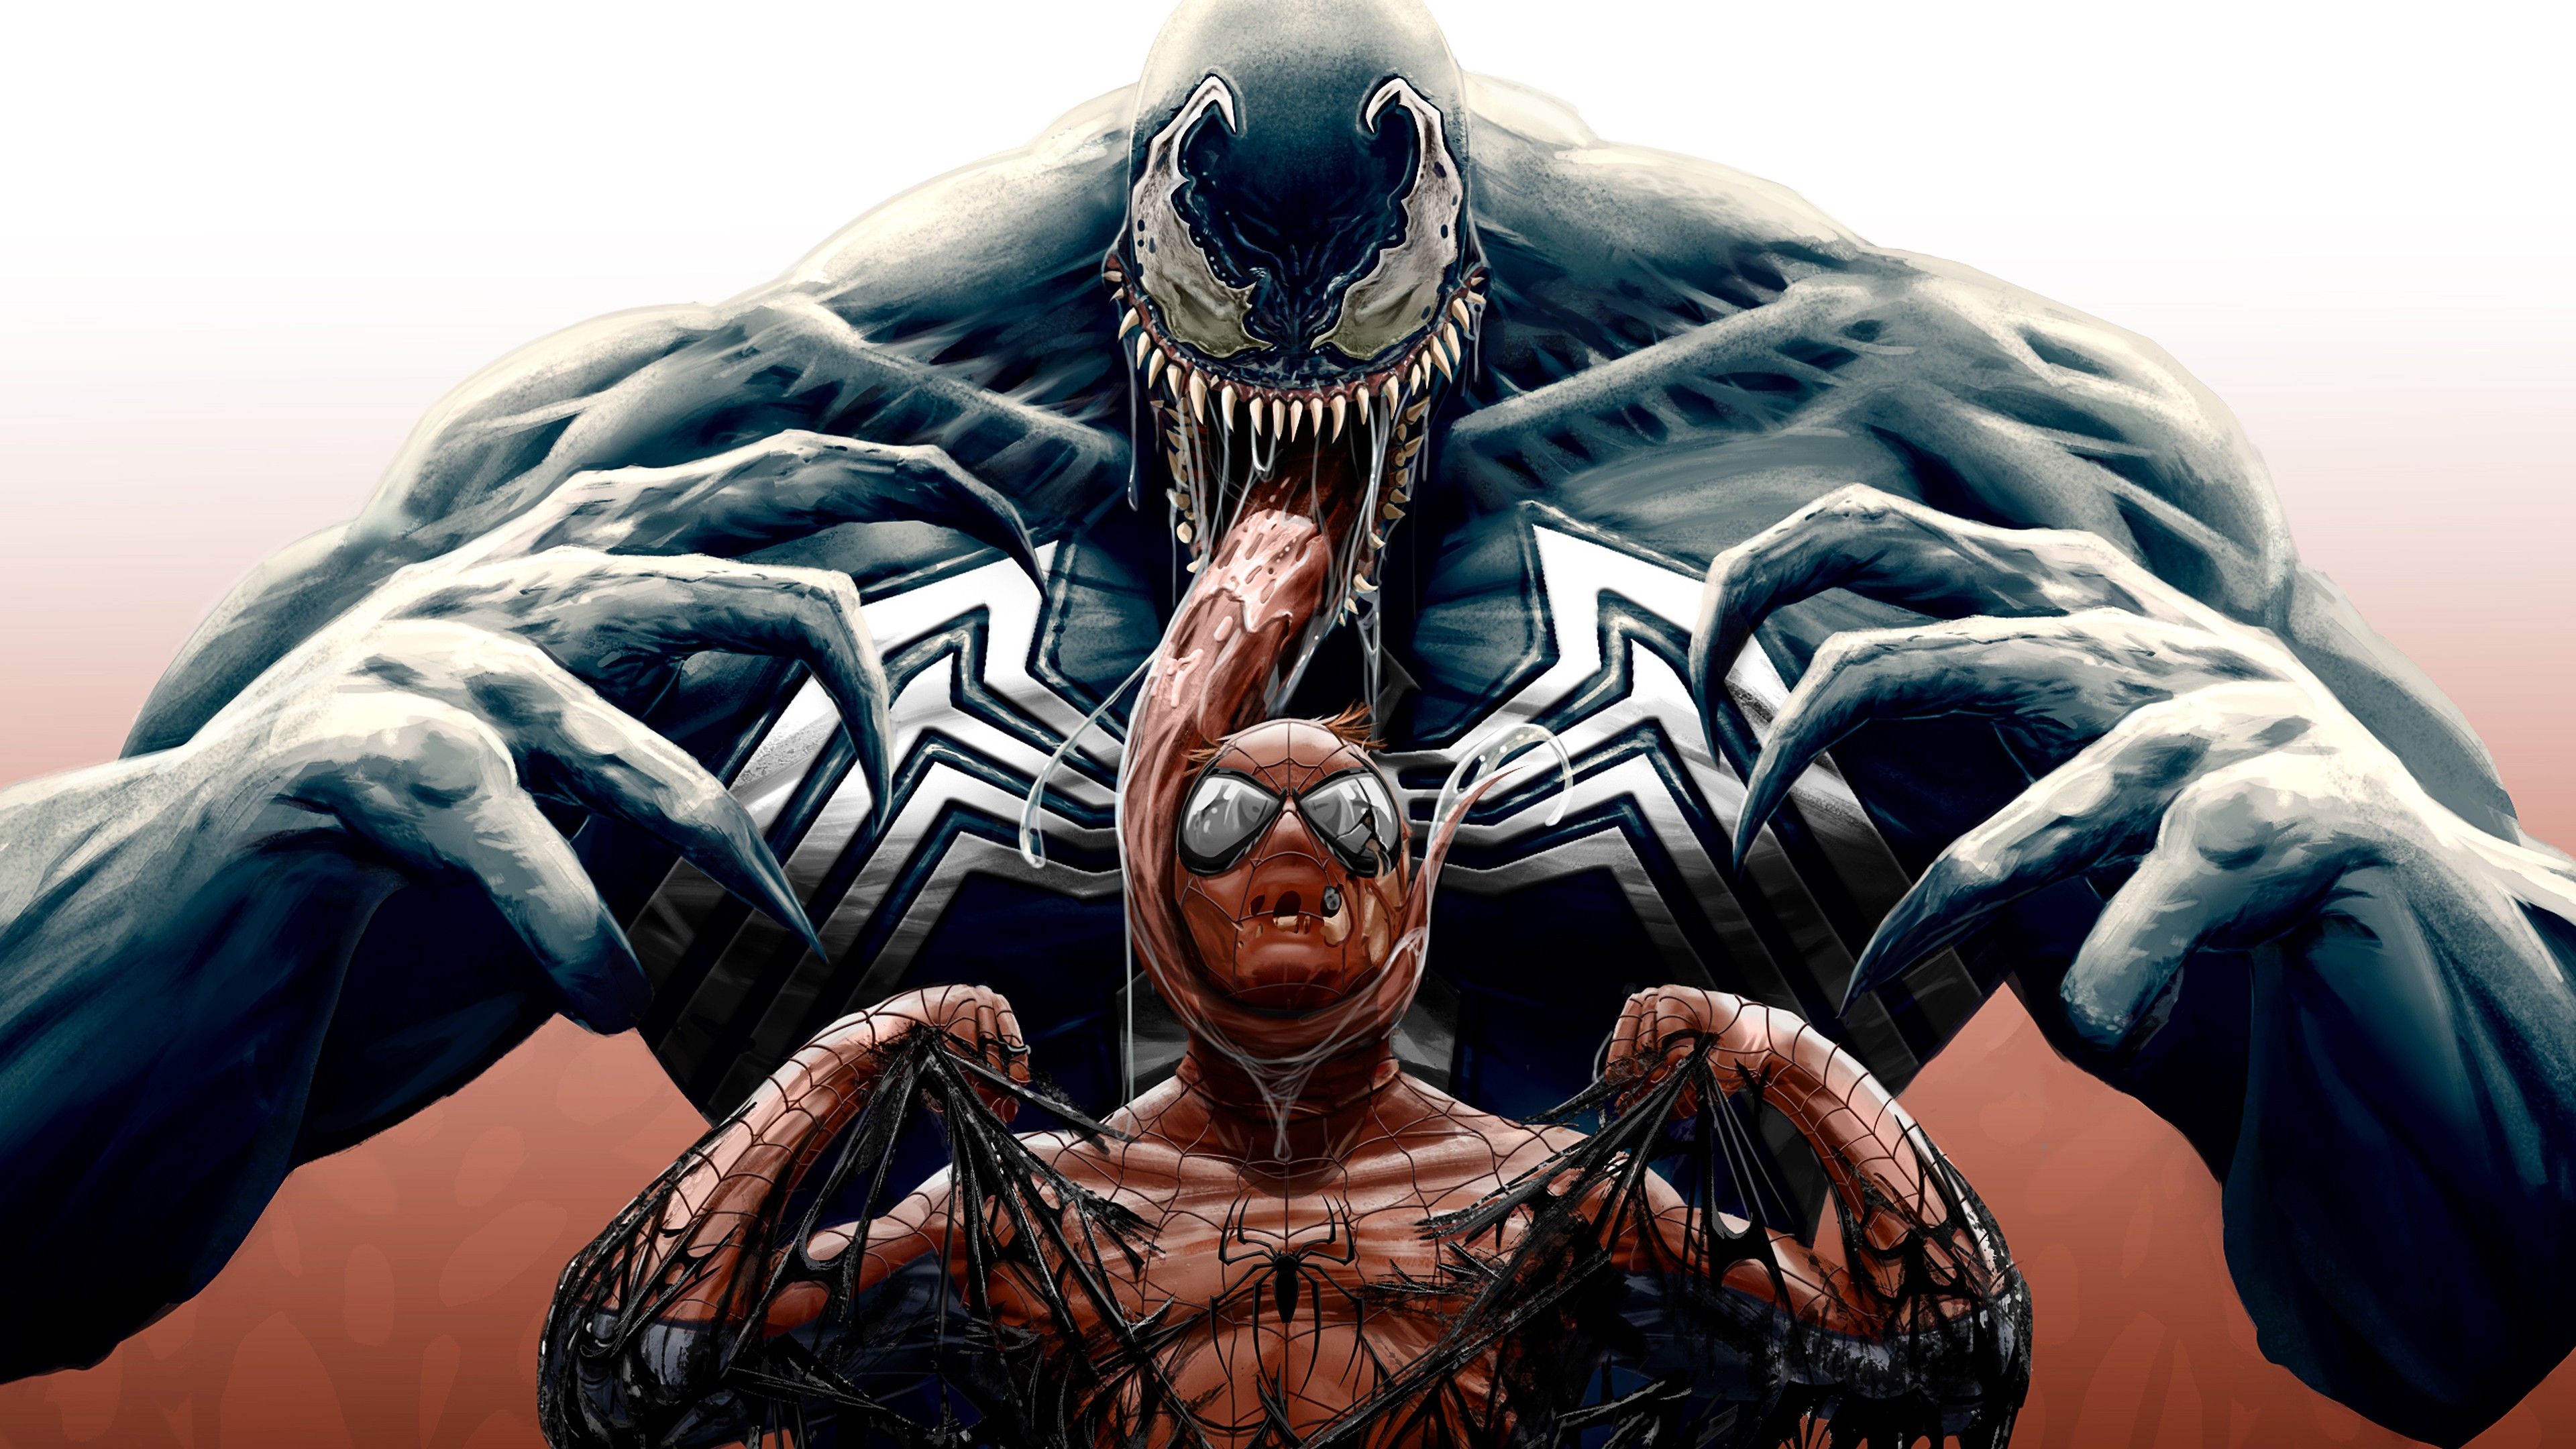 Wallpaper Spider Man, Venom, Marvel Comics, Superheroes, 4K, Creative Graphics / Editor's Picks,. Wallpaper For IPhone, Android, Mobile And Desktop